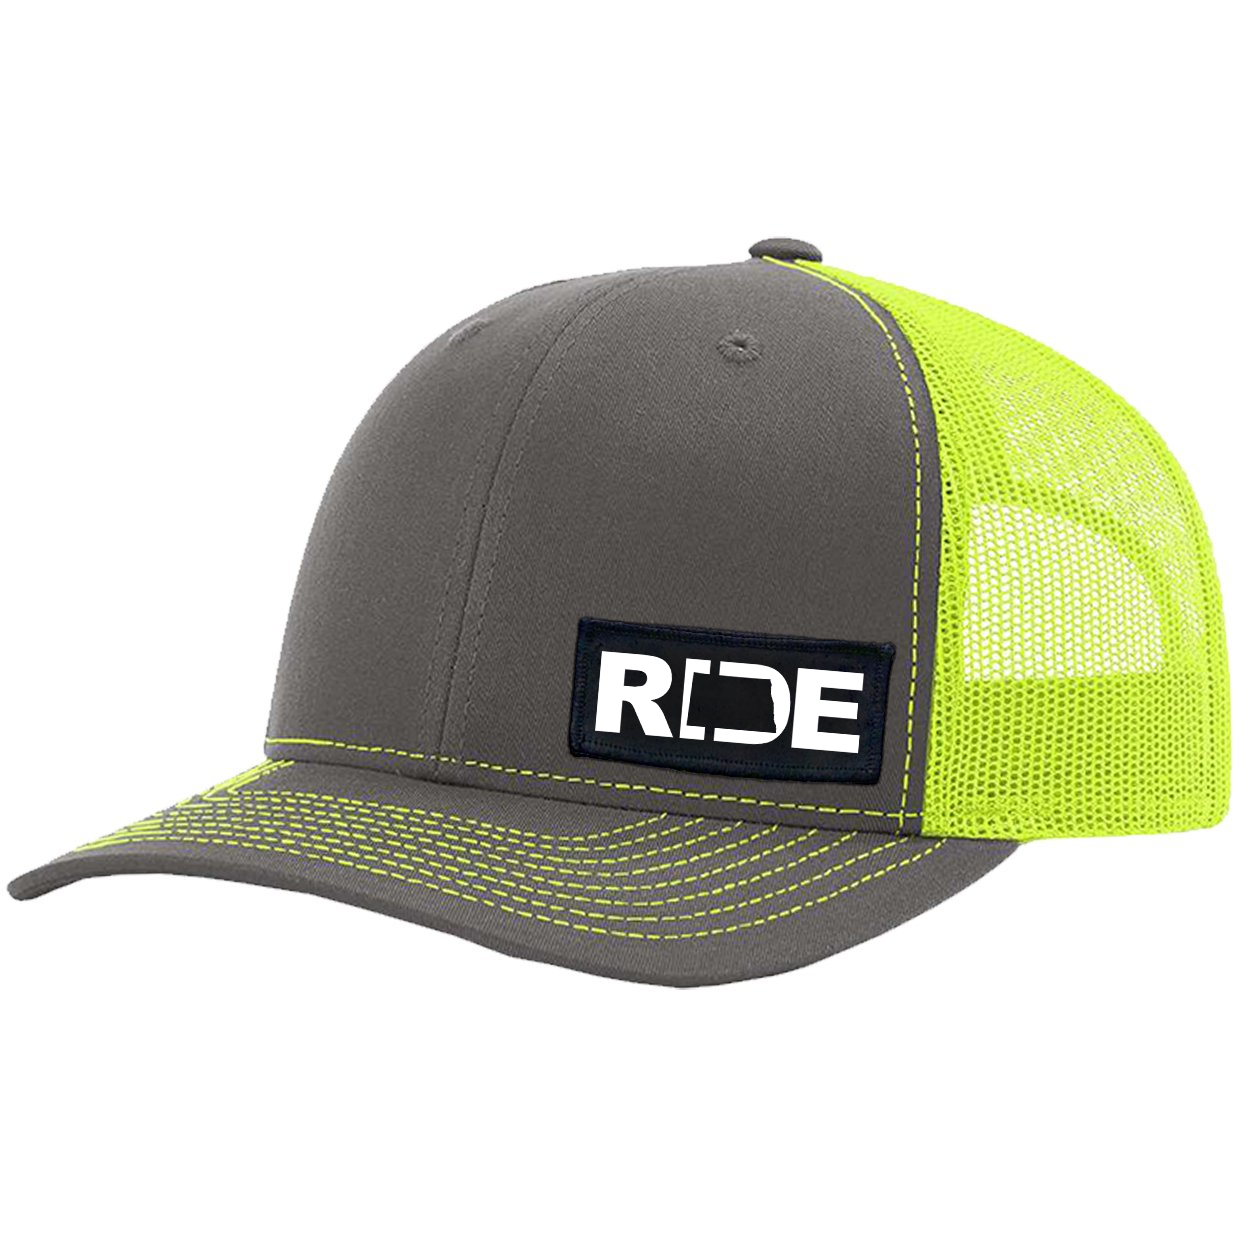 Ride North Dakota Night Out Woven Patch Snapback Trucker Hat Charcoal/Neon Yellow (White Logo)